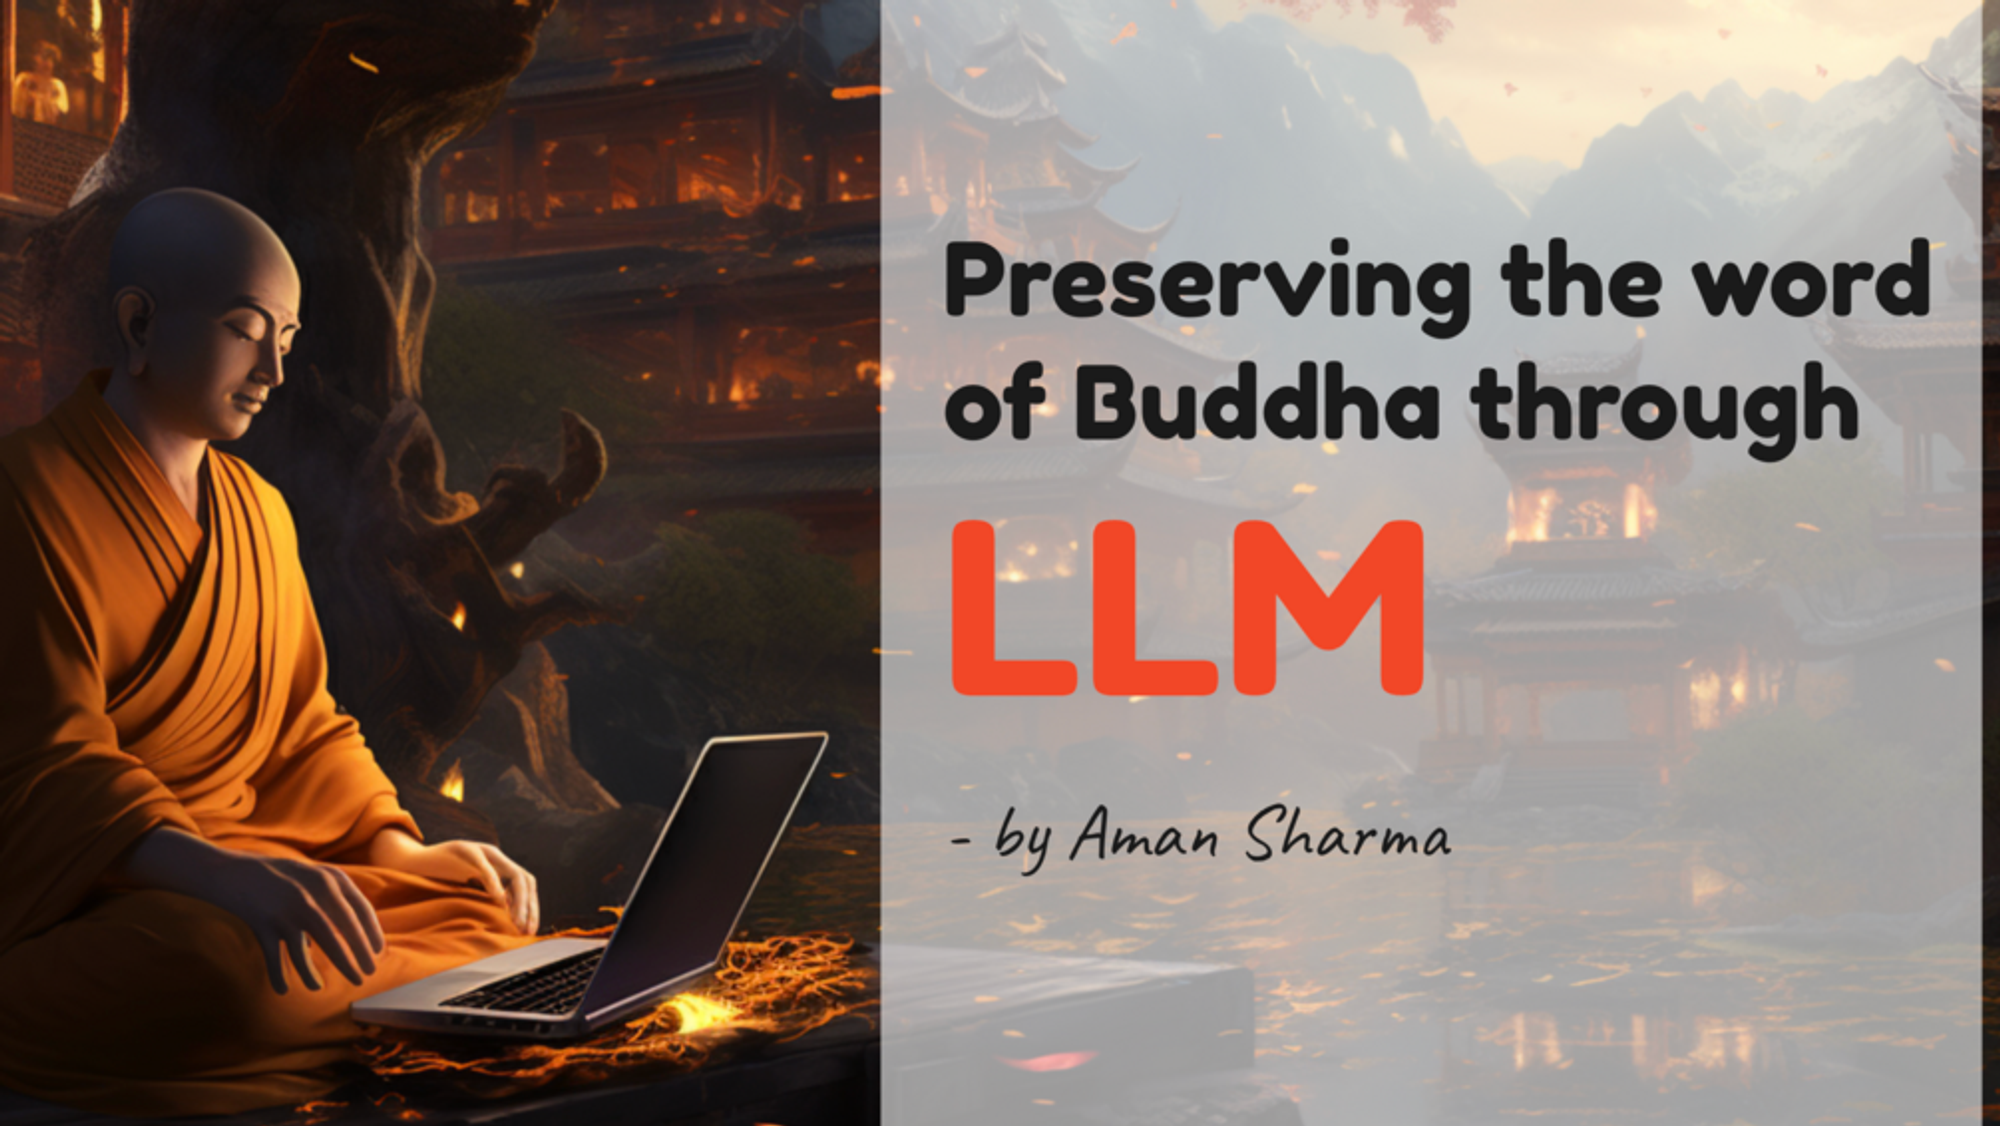 Preserving the word of Buddha through LLM